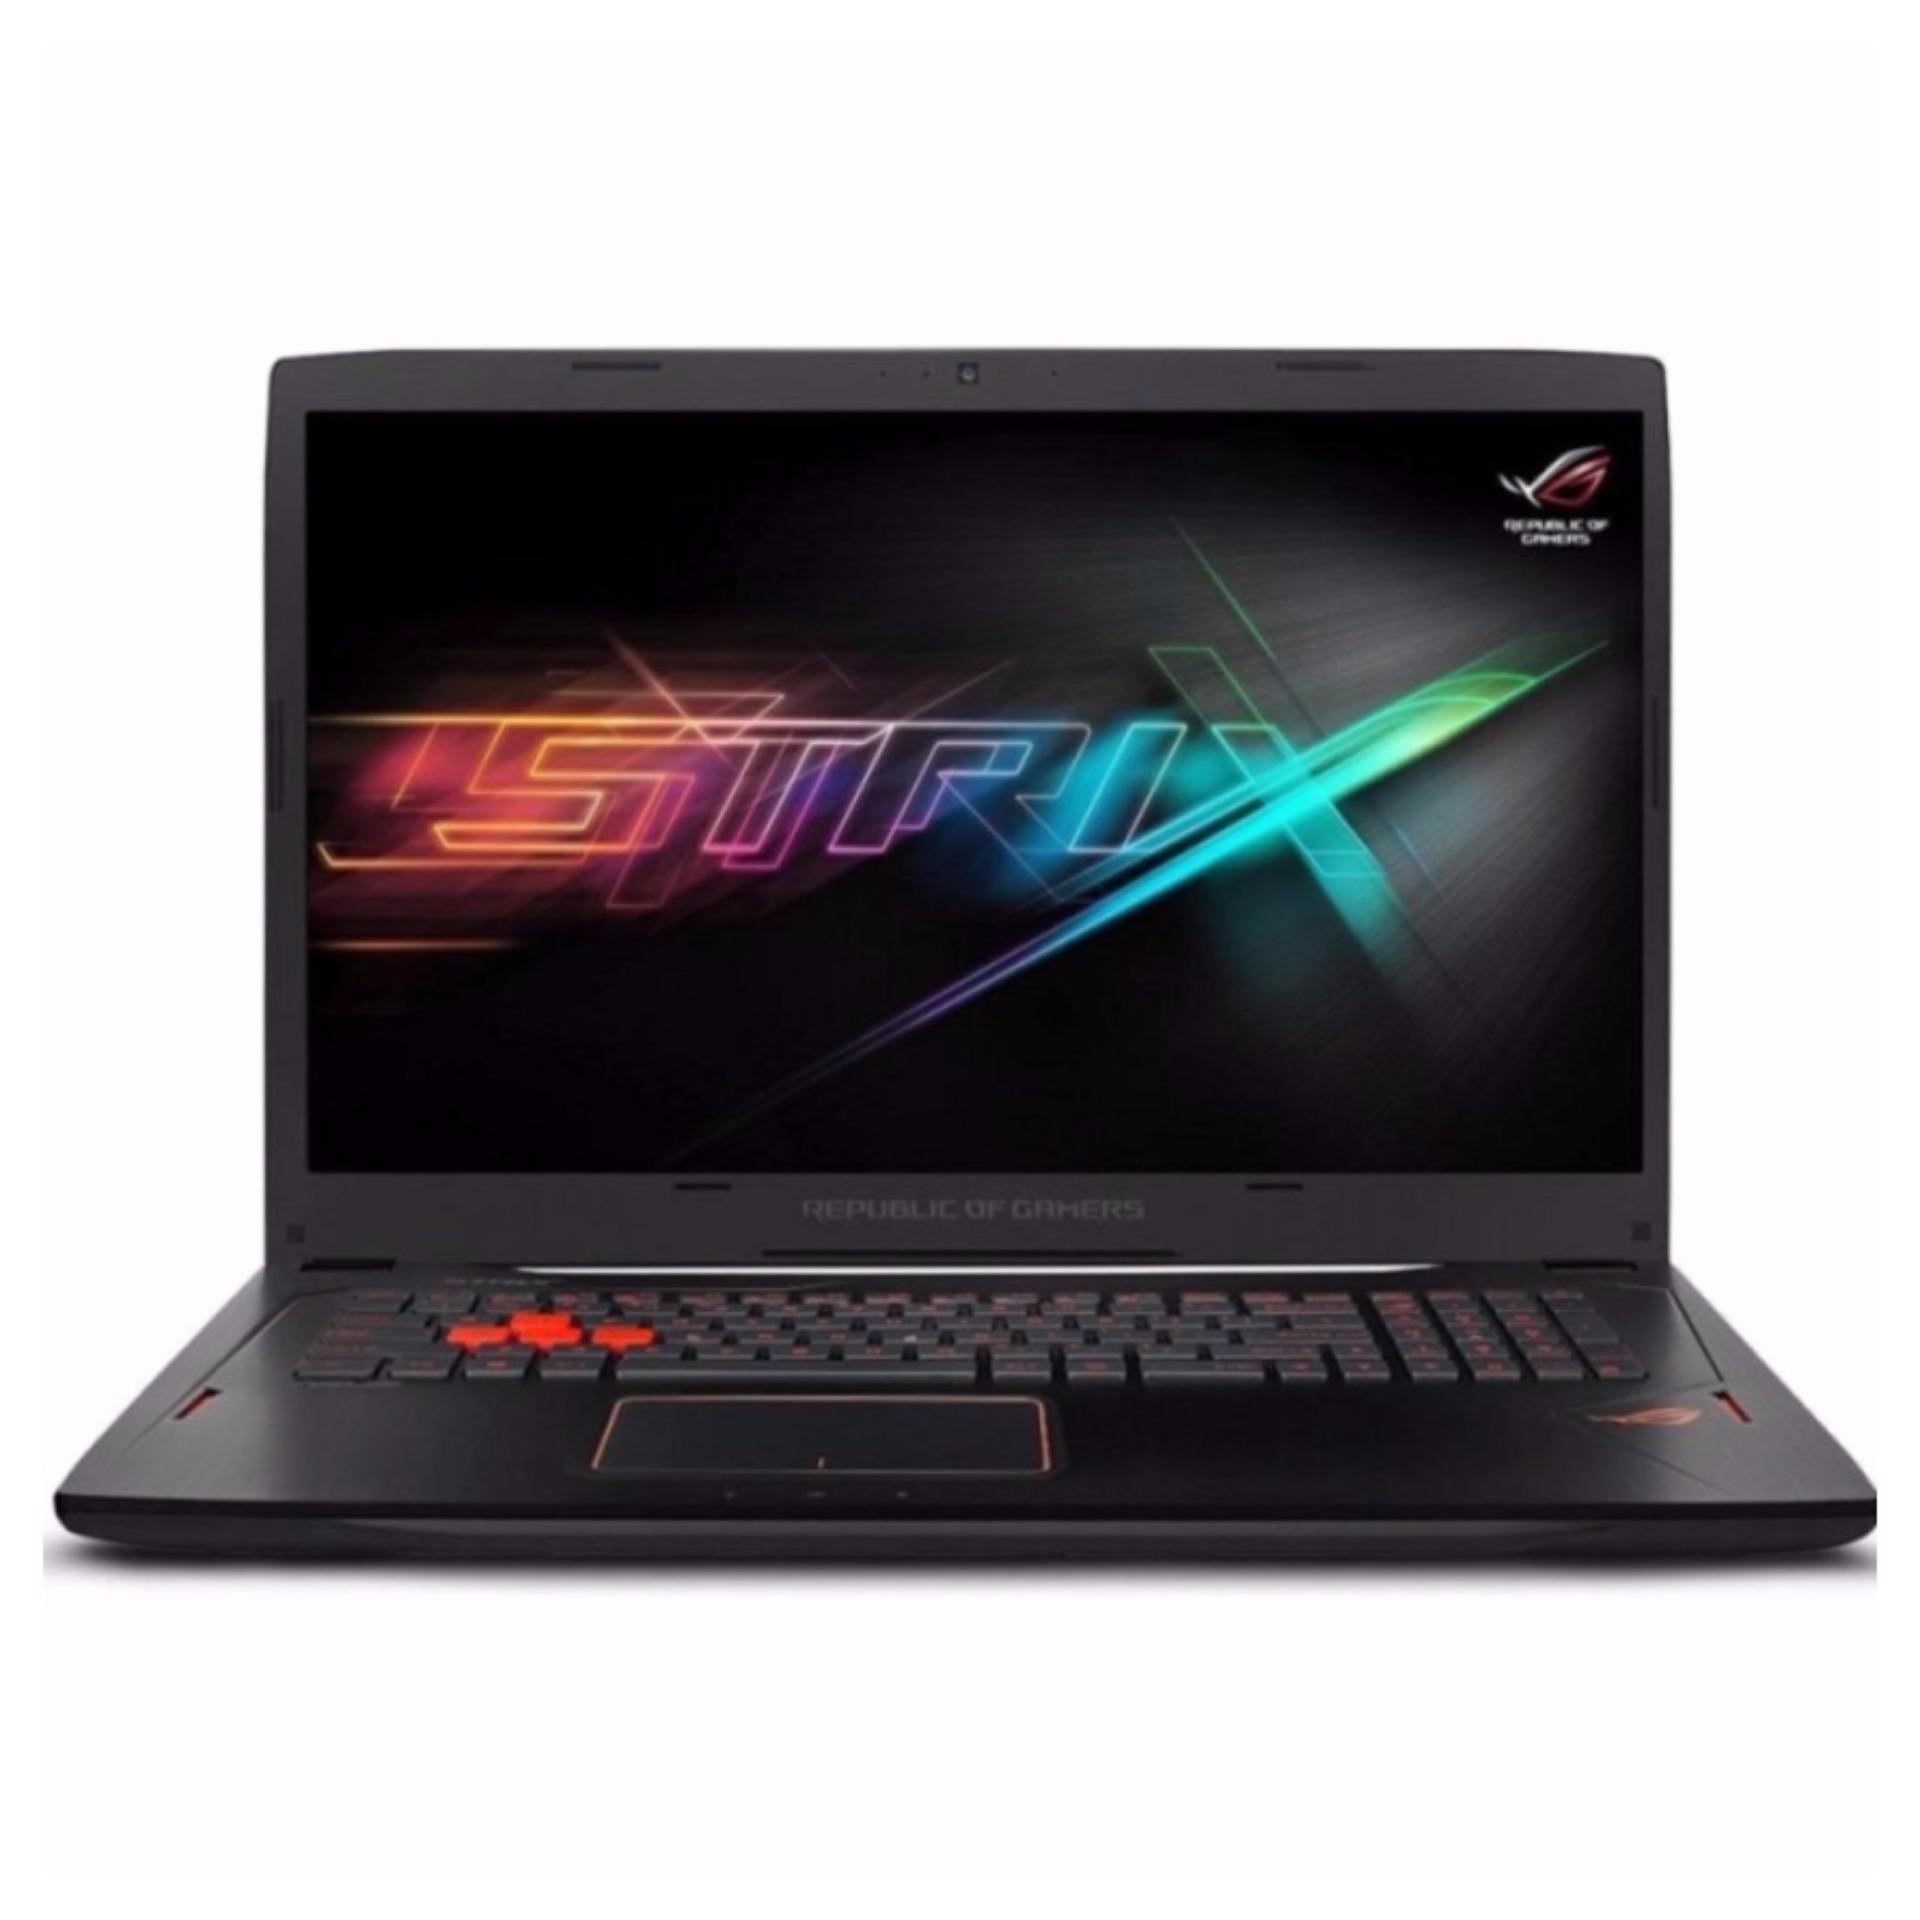 Asus ROG Strix GL702VM-GC225T-I7-7700HQ (GTX1060 6GB) Gaming Laptop